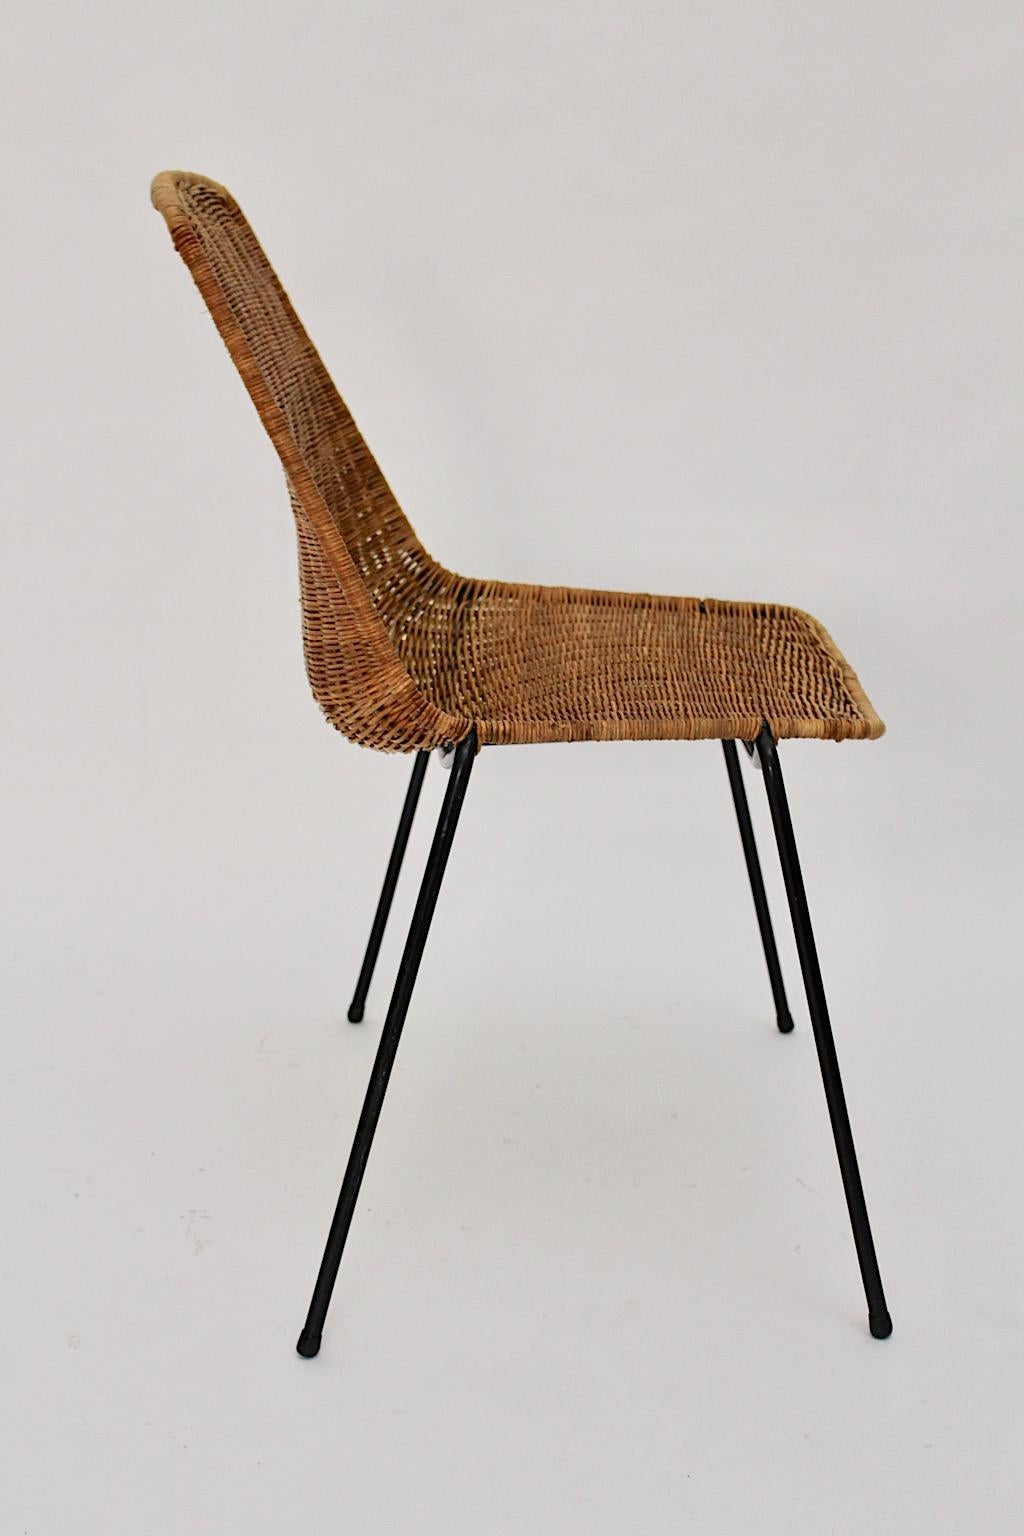 Swiss Gian Franco Legler Vintage Rattan Metal Mid-Century Modern Chair Switzerland